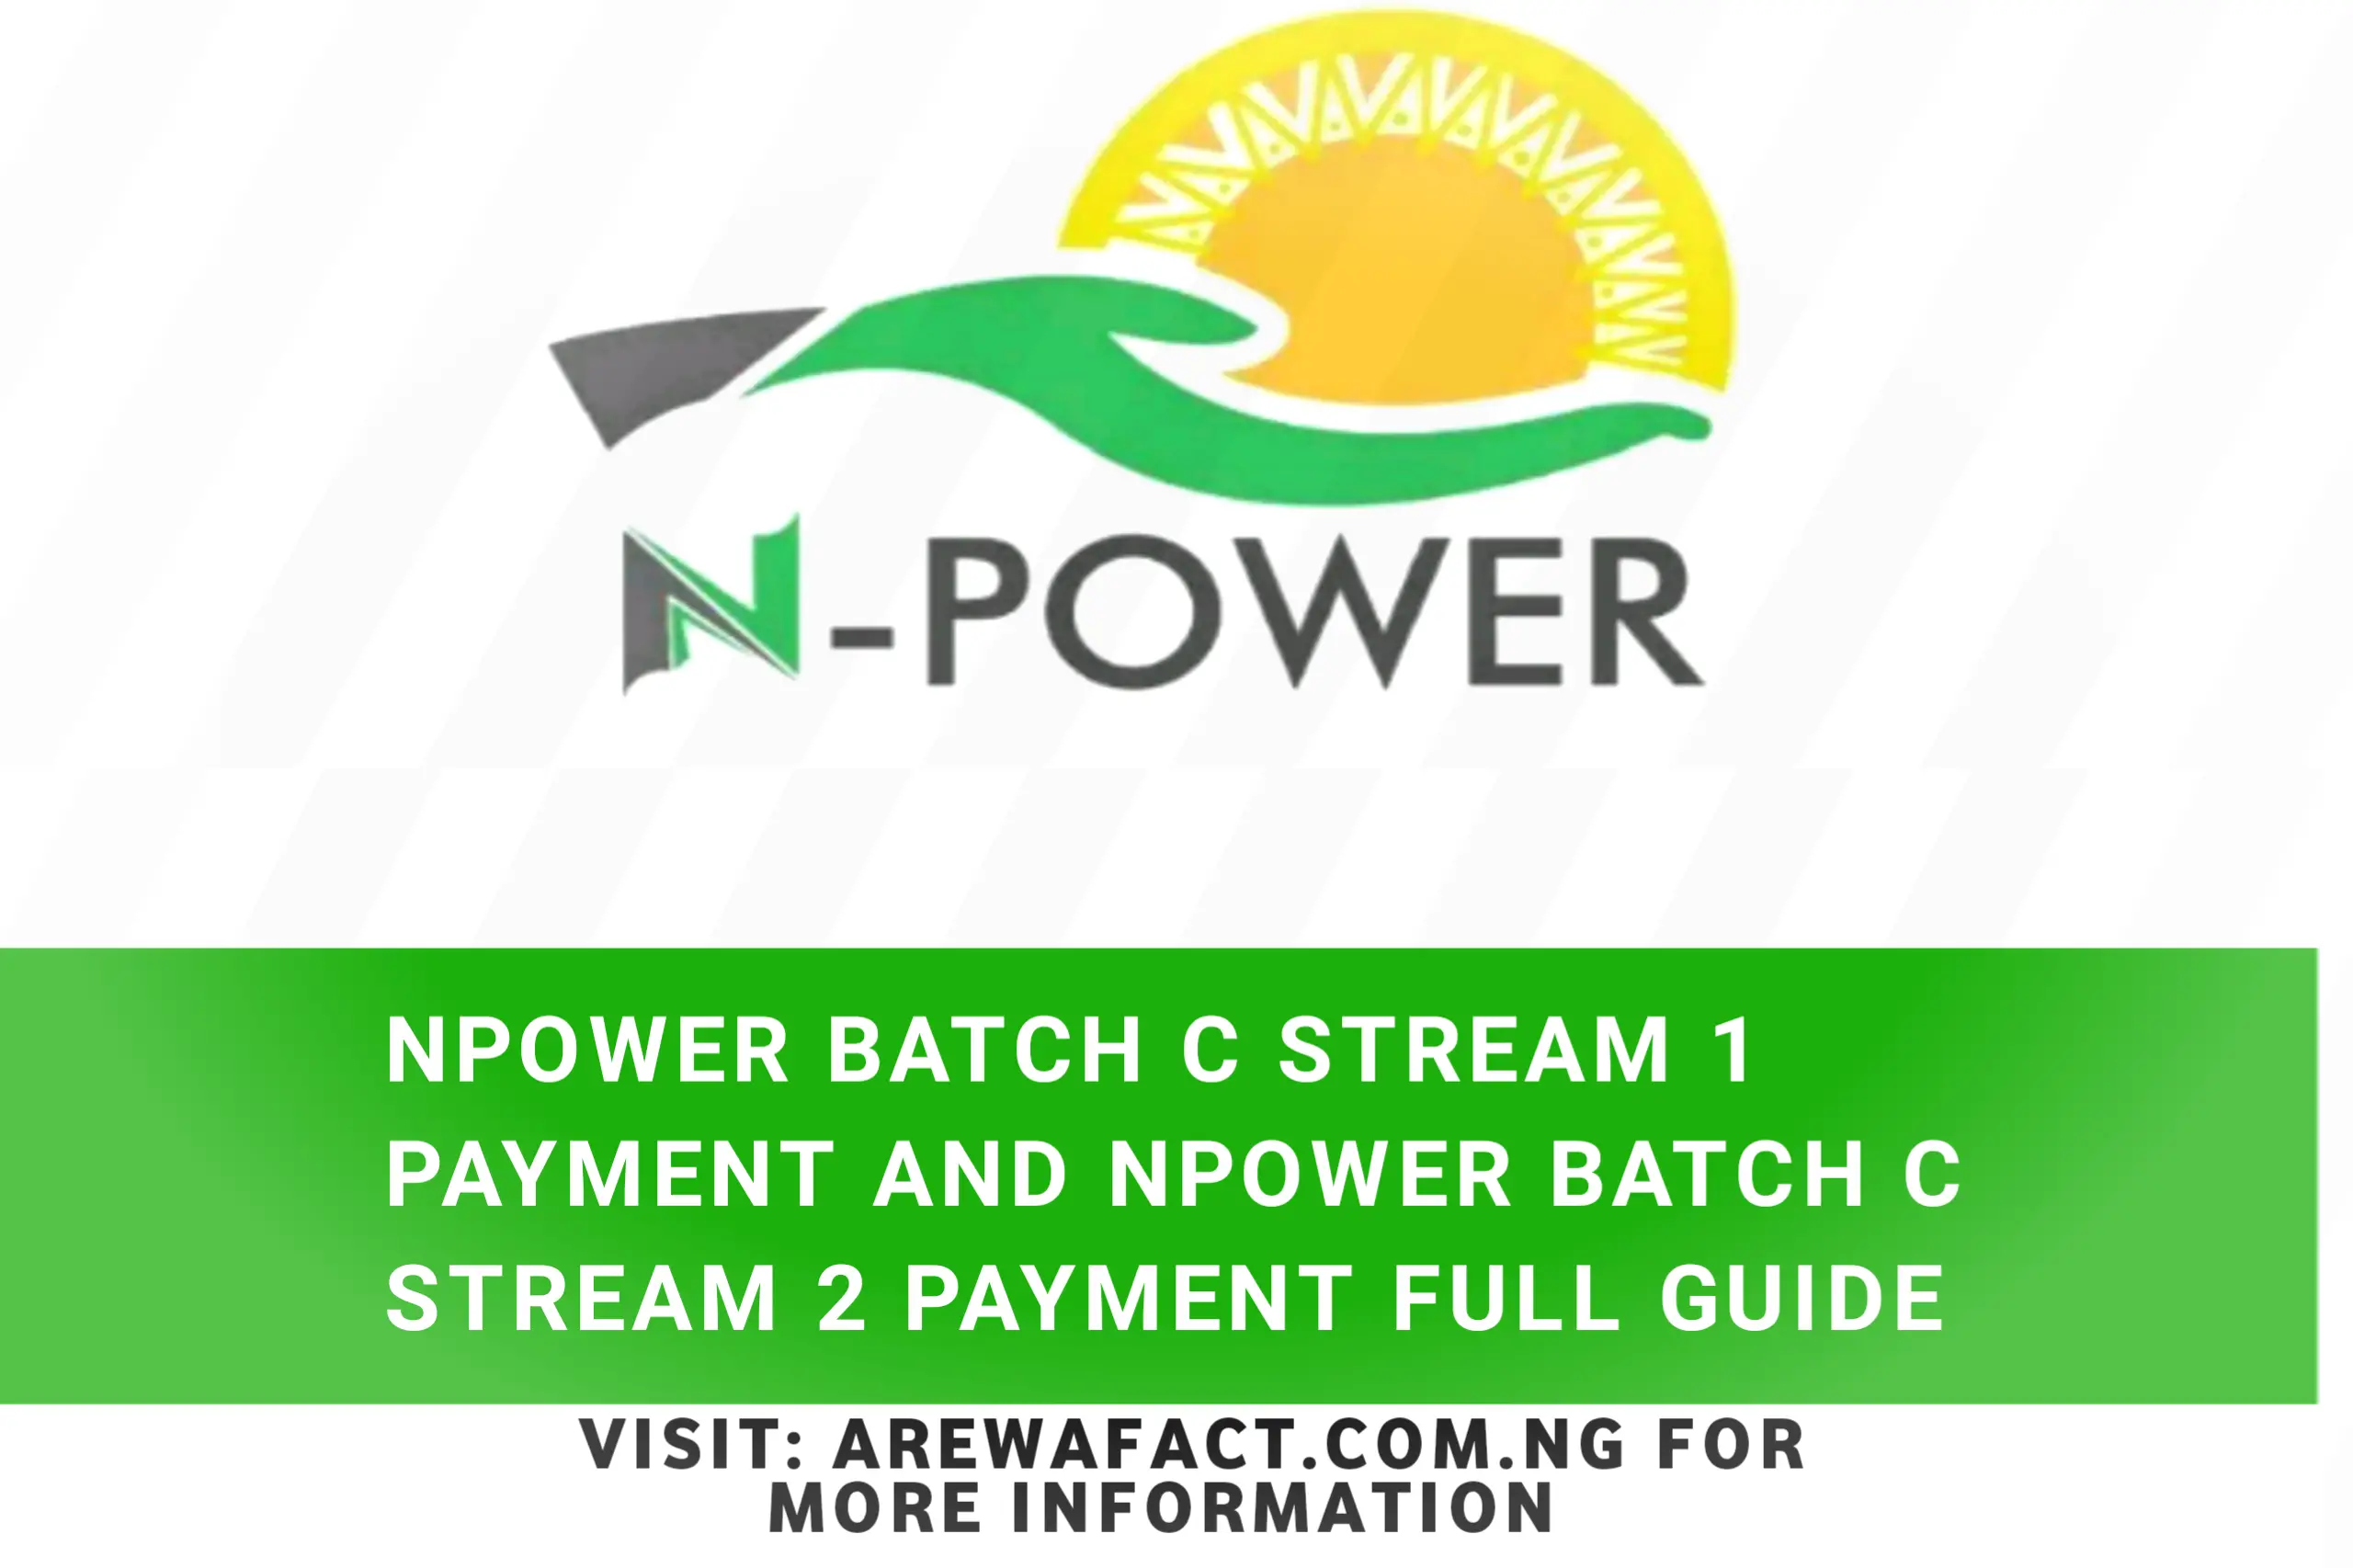 Npower Batch c Stream 2 Payment